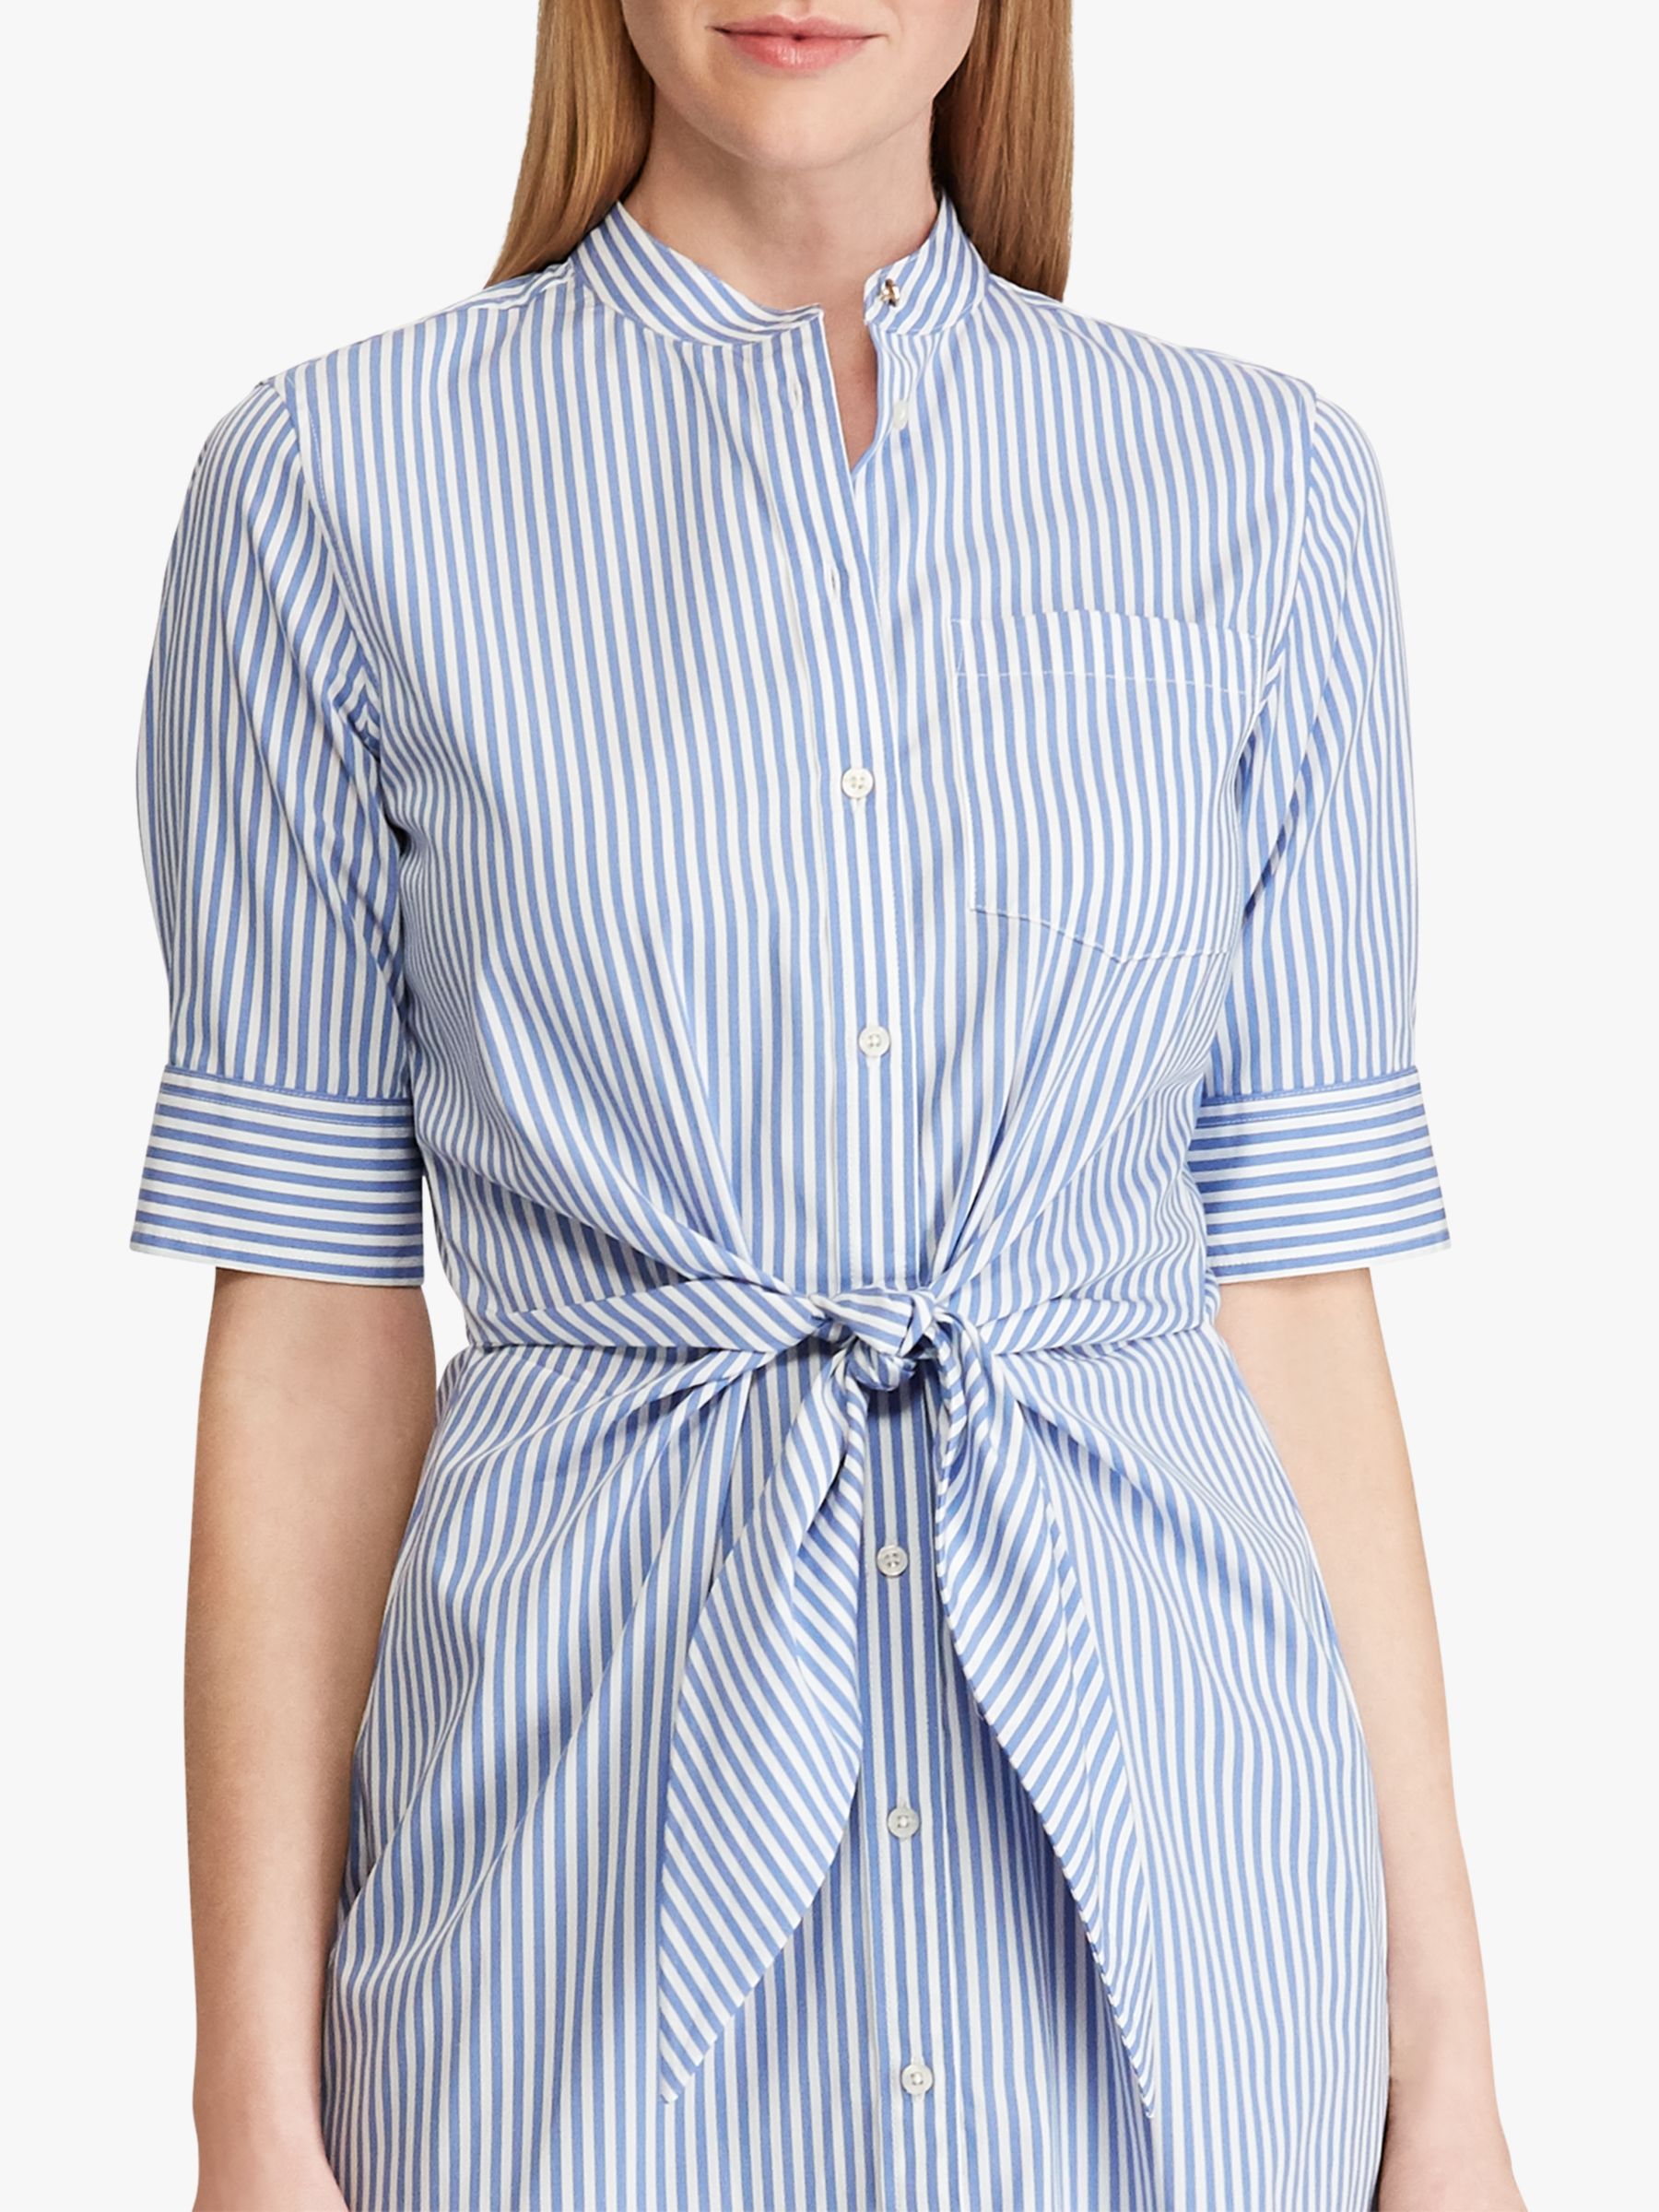 Lauren Ralph Lauren Wilda Striped Shirt Dress, Blue/White